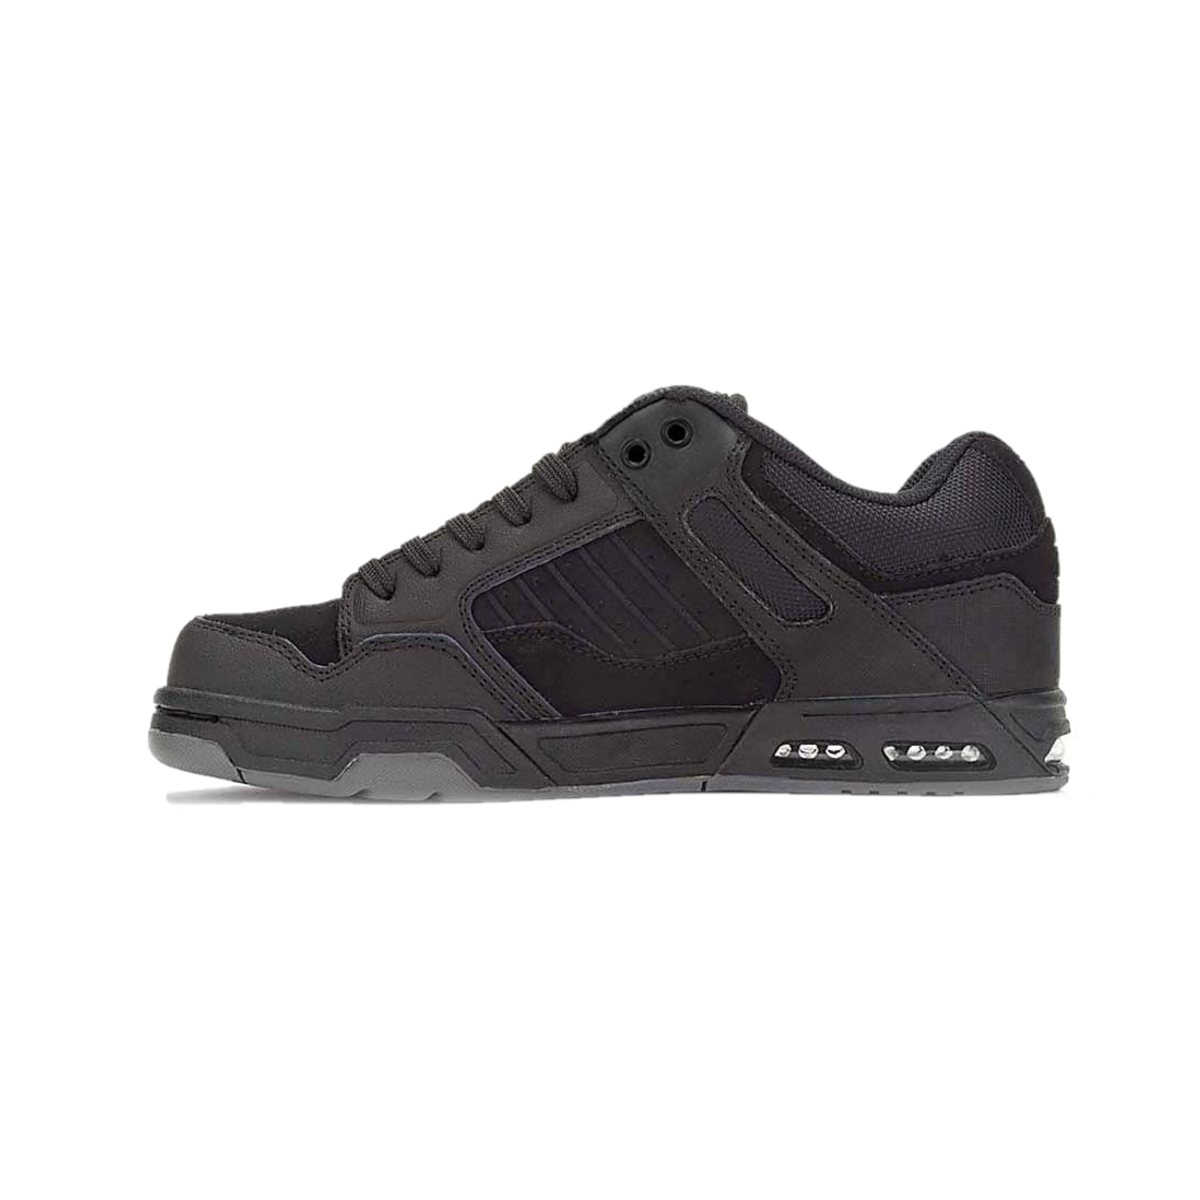 DVS F0000056982 ENDURO HEIR MN'S (Medium) Black/Black Leather & Nubuck Skate Shoes